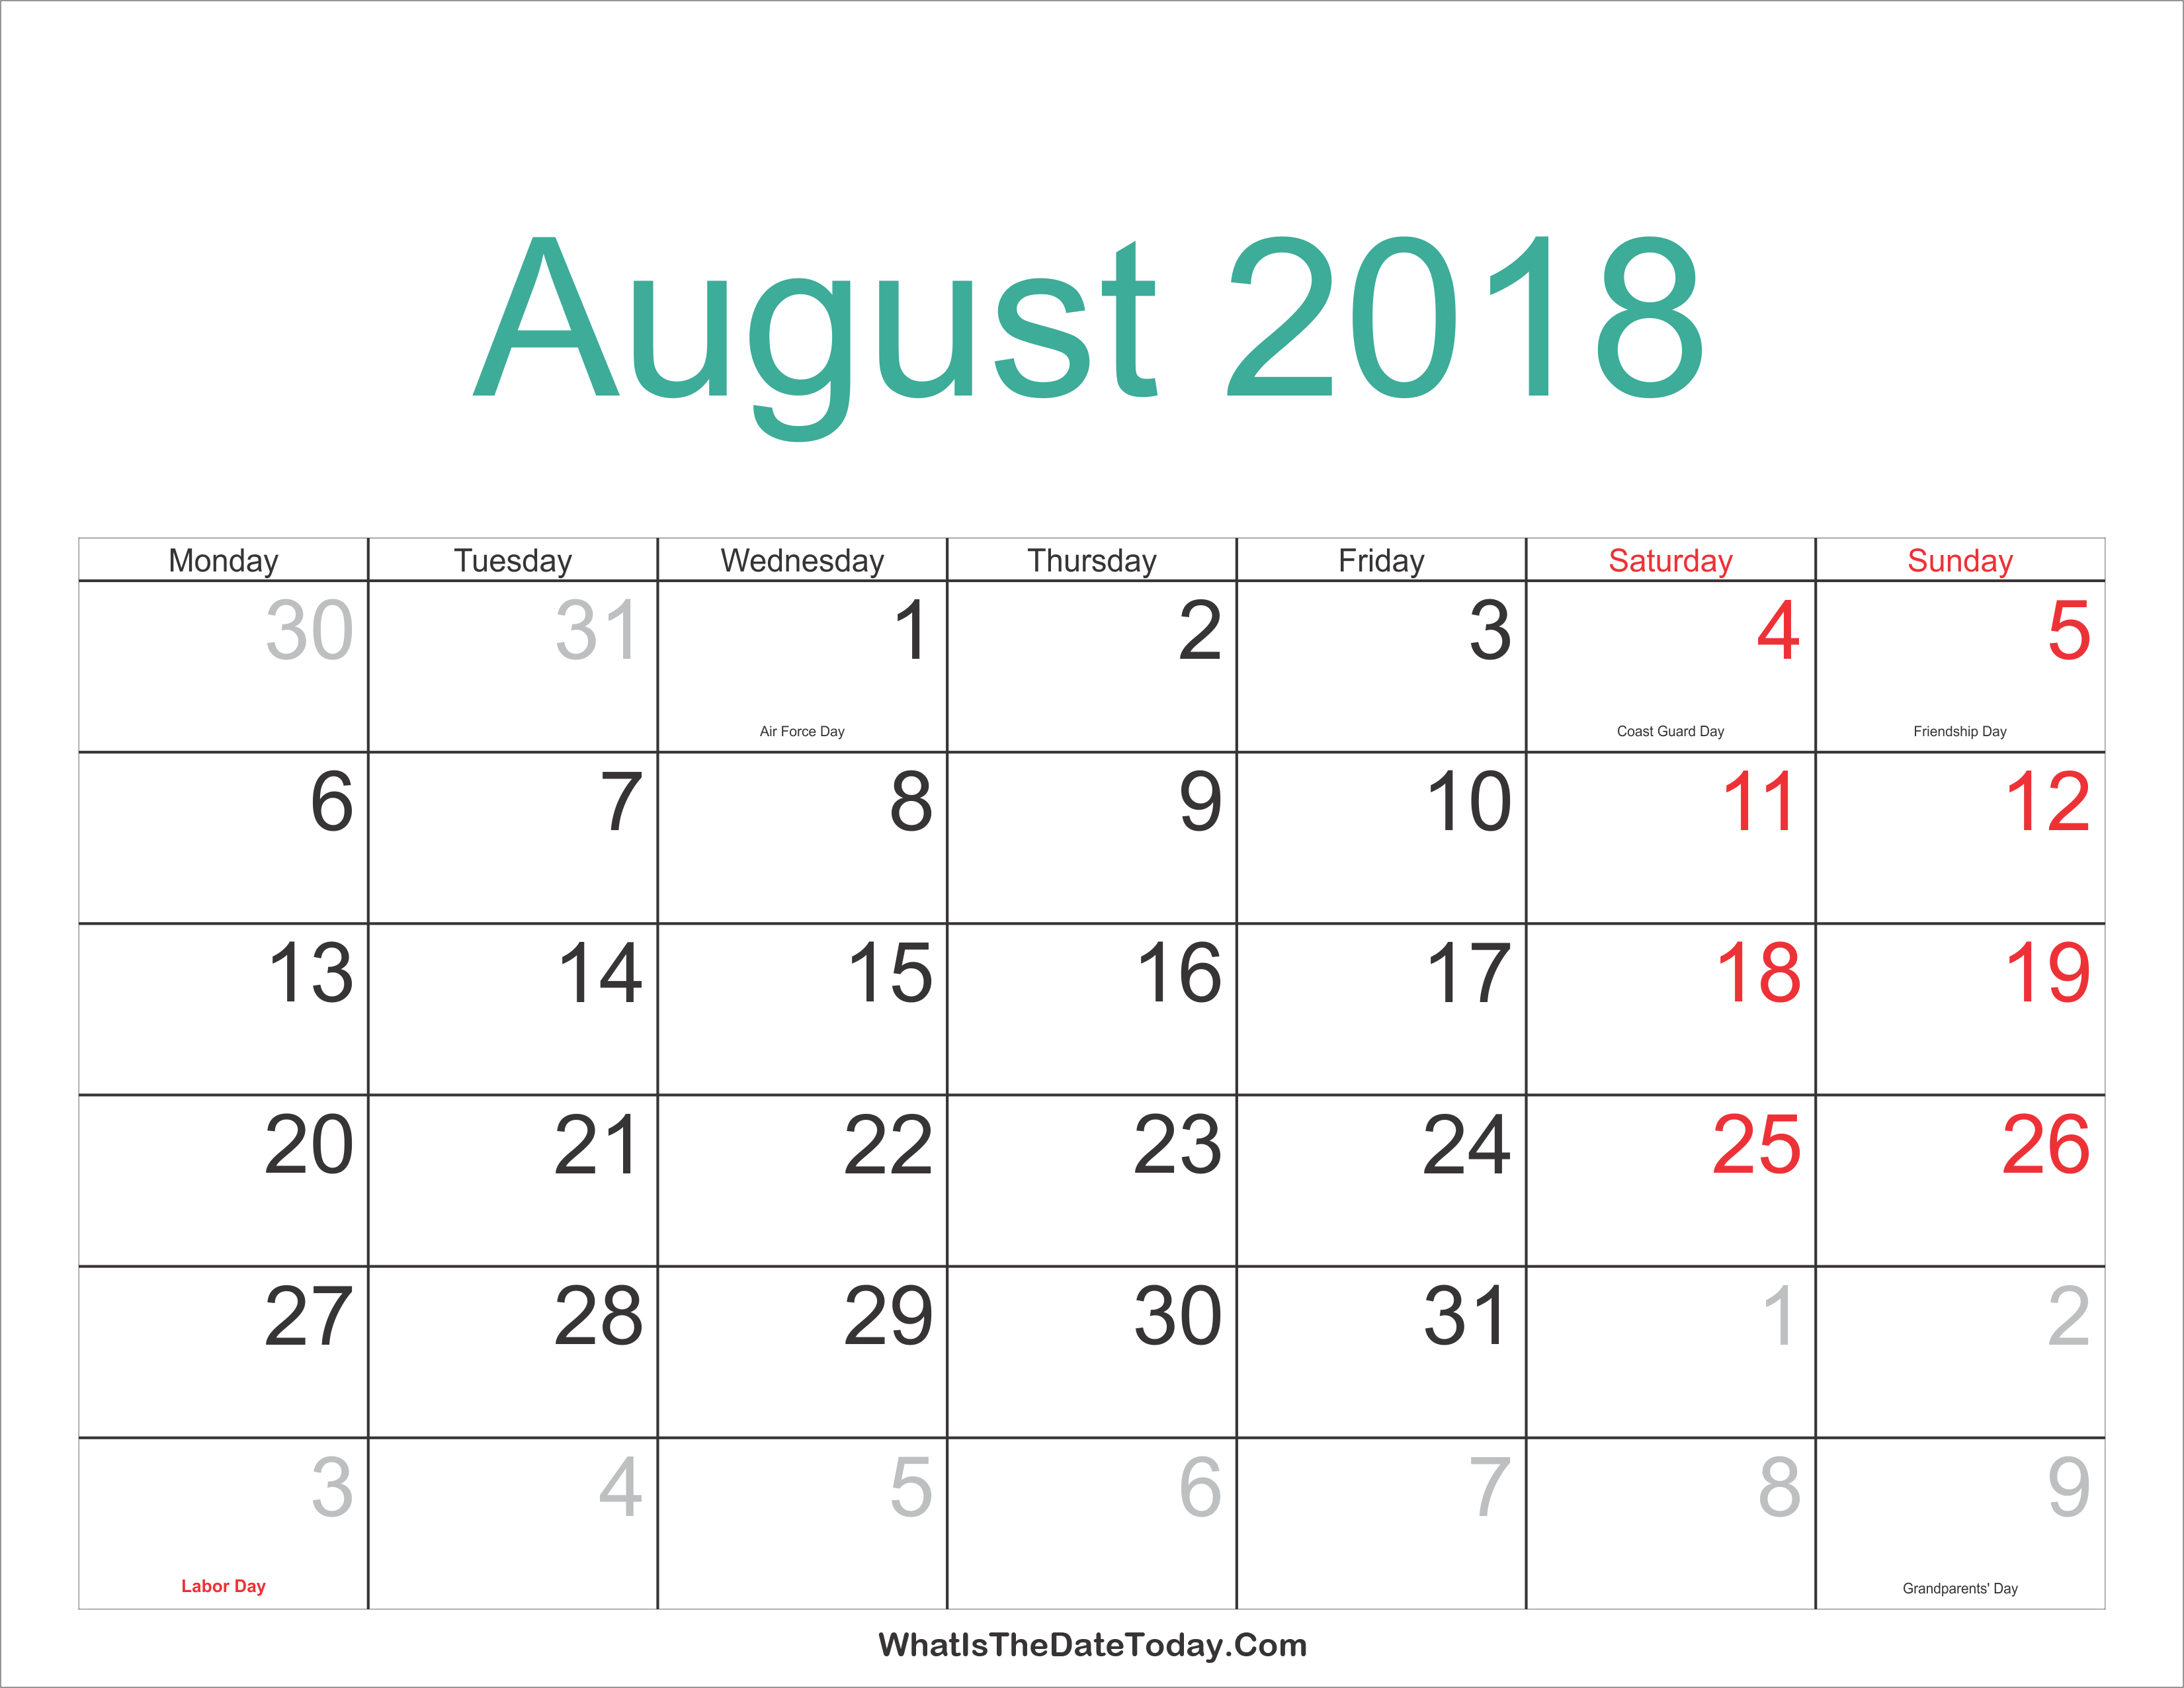 August 2018 Calendar Printable with Holidays Whatisthedatetoday Com